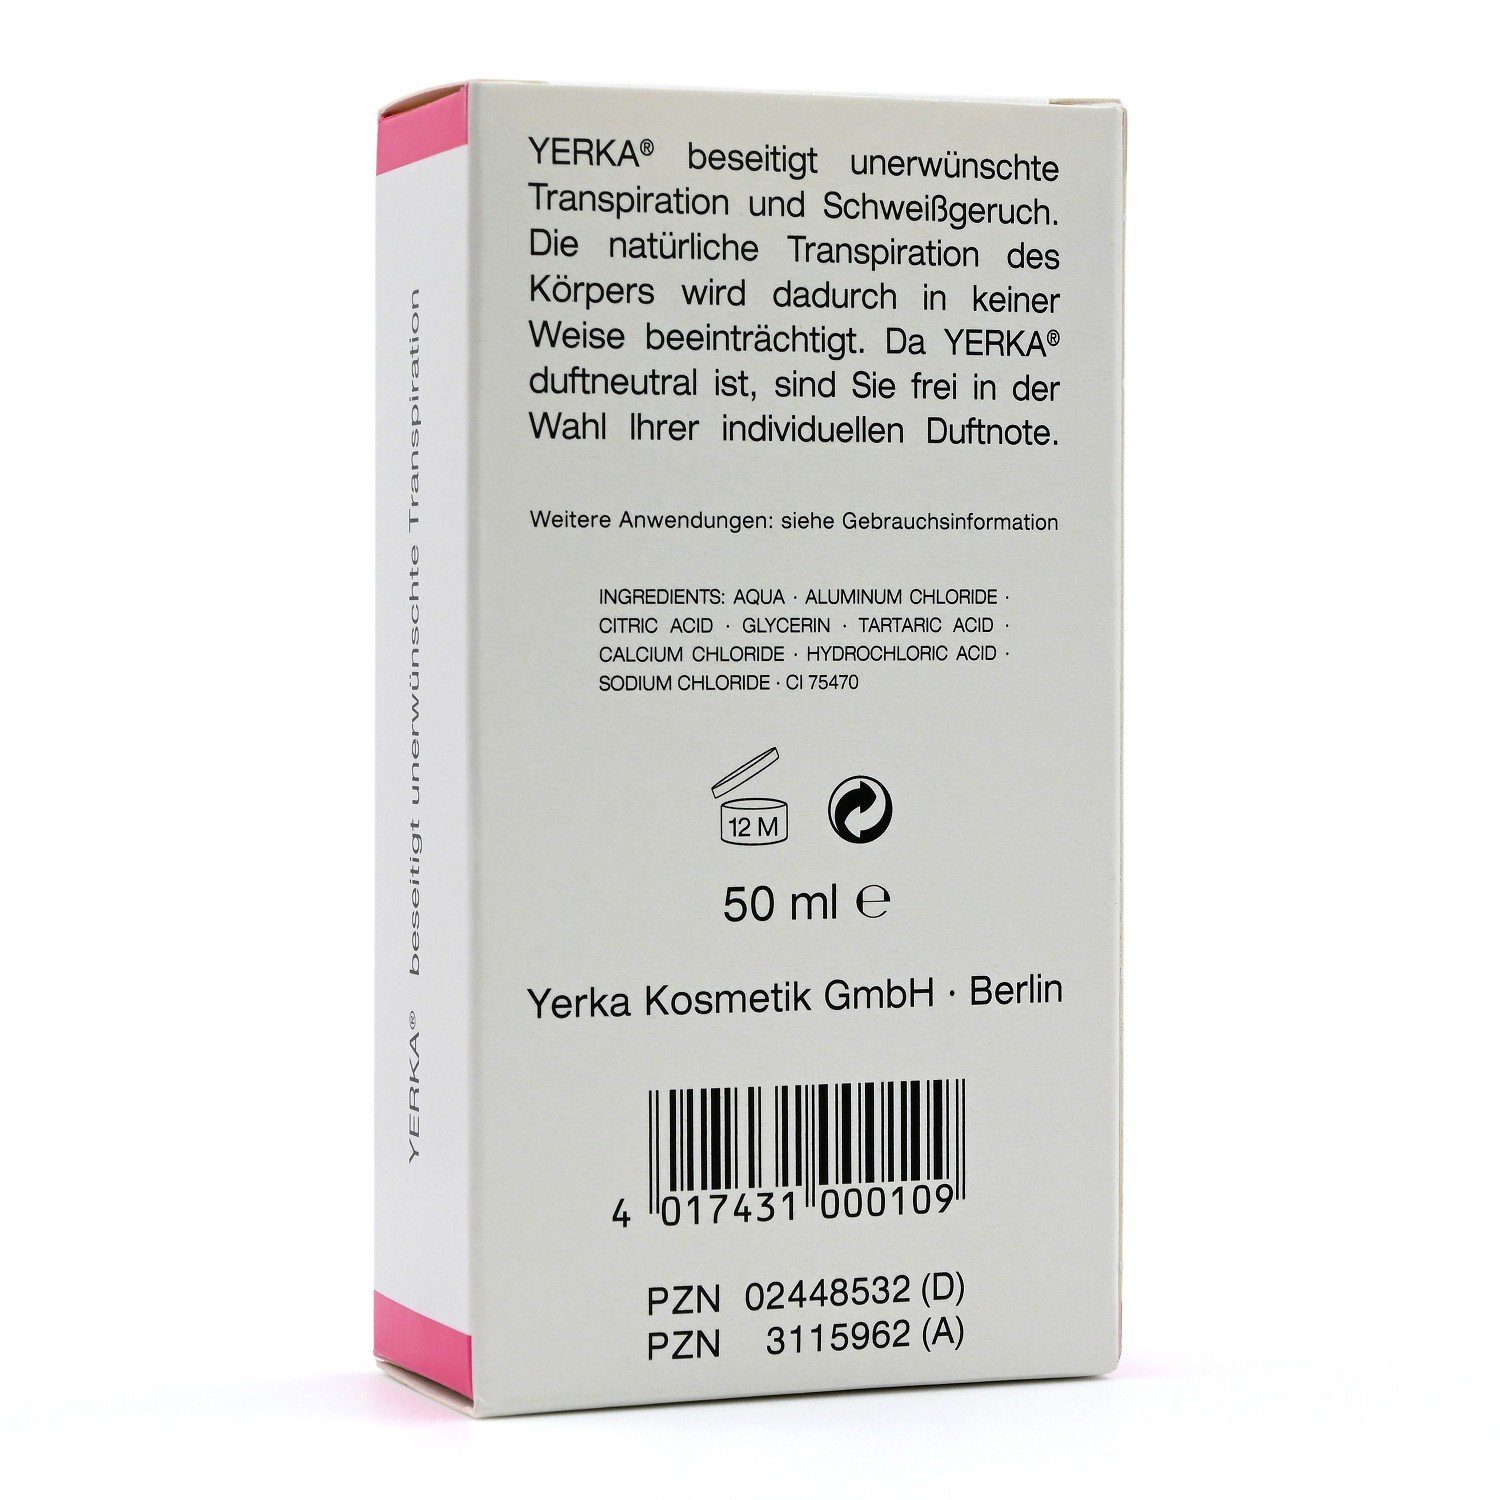 GmbH YERKA YERKA Antitranspirant, ml, 50 Kosmetik Deo-Pumpspray Transpirant Deodorant